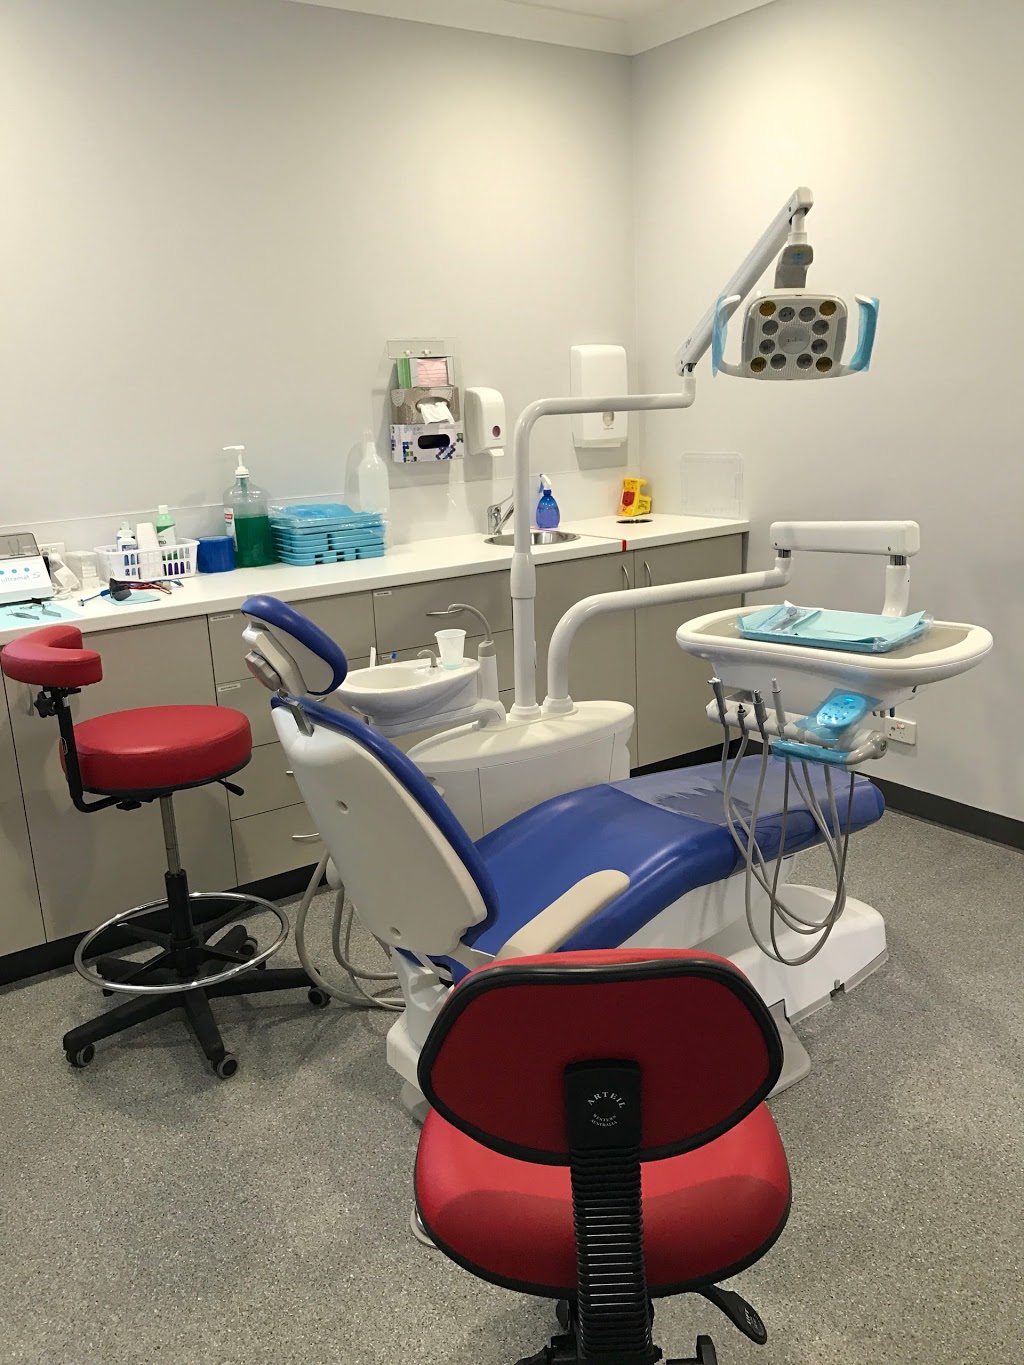 Jupiter Dental clinic | Suite 2/23 Gibbs Rd, Atwell WA 6164, Australia | Phone: (08) 6364 0596